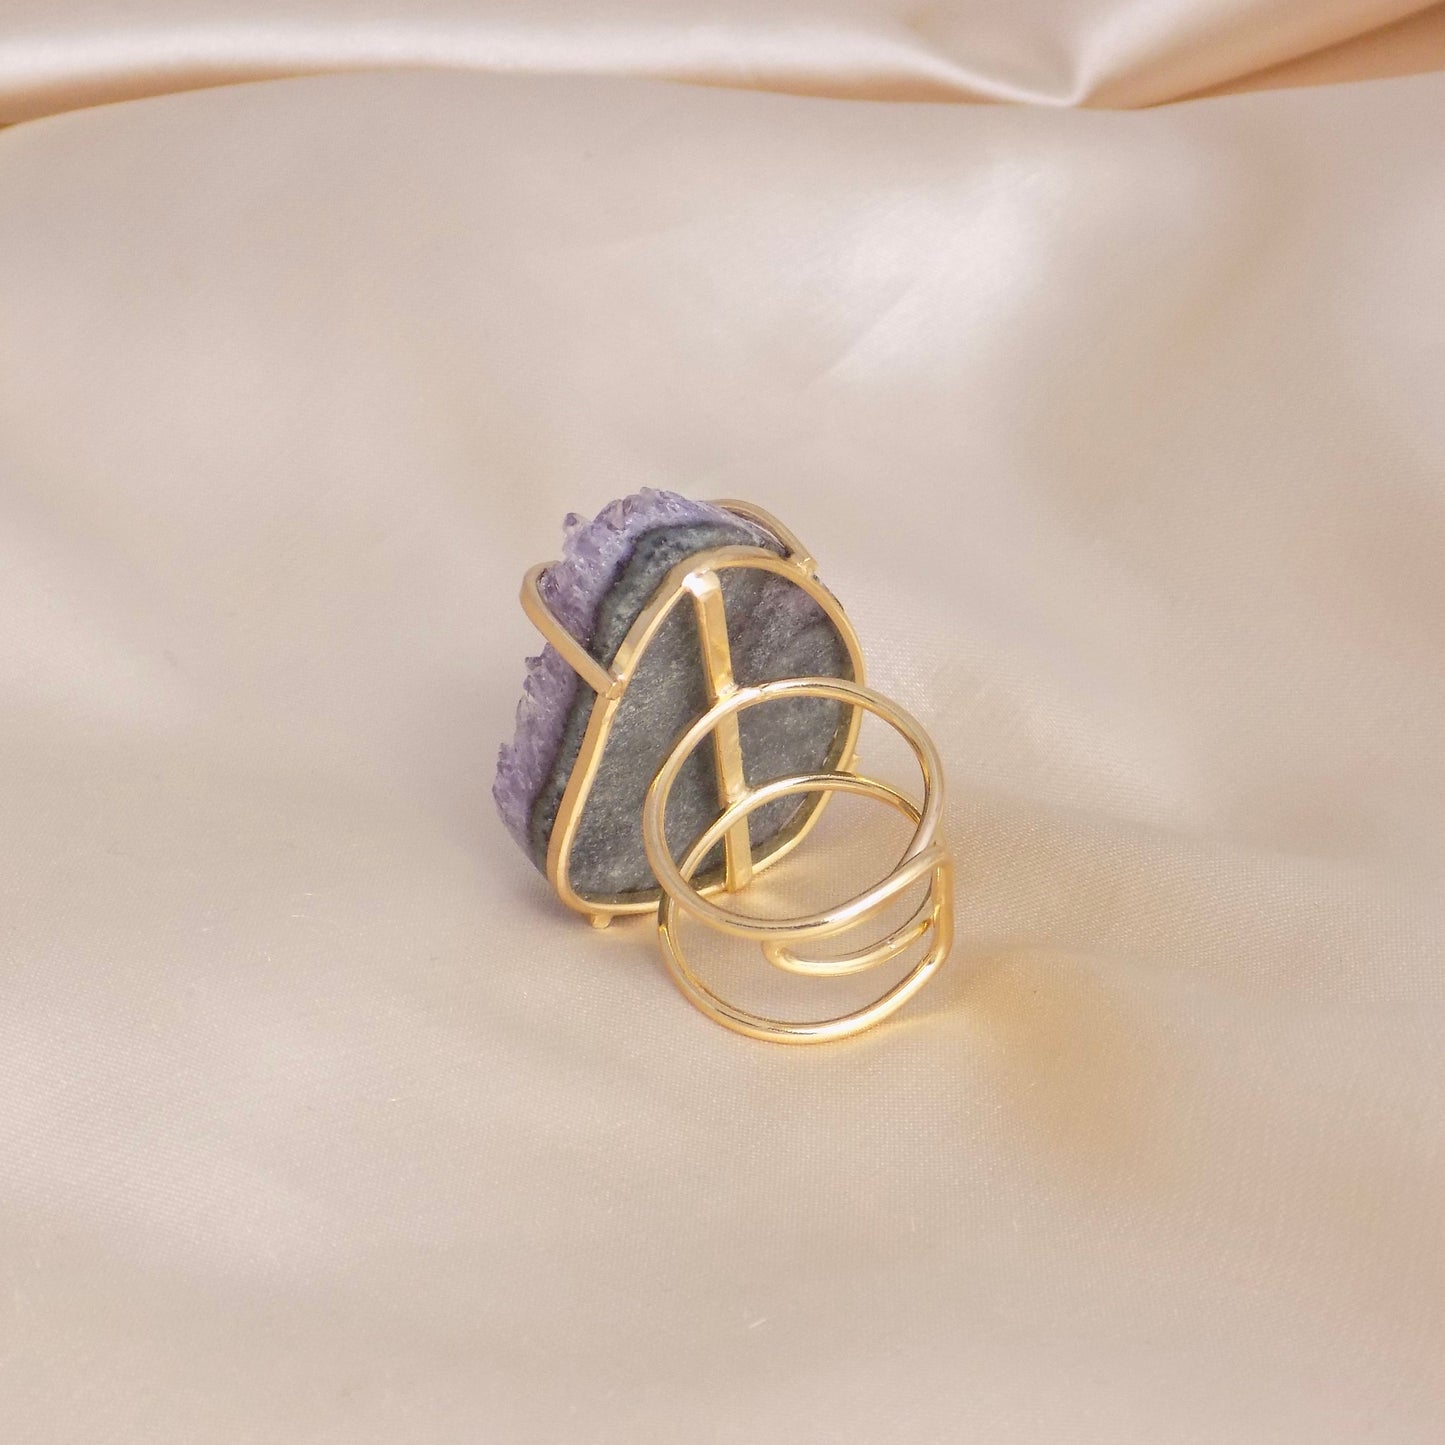 Large Amethyst Statement Ring, Raw Amethyst Druzy Ring Adjustable, Purple Crystal Ring, Birthday Gift Women, G14-740